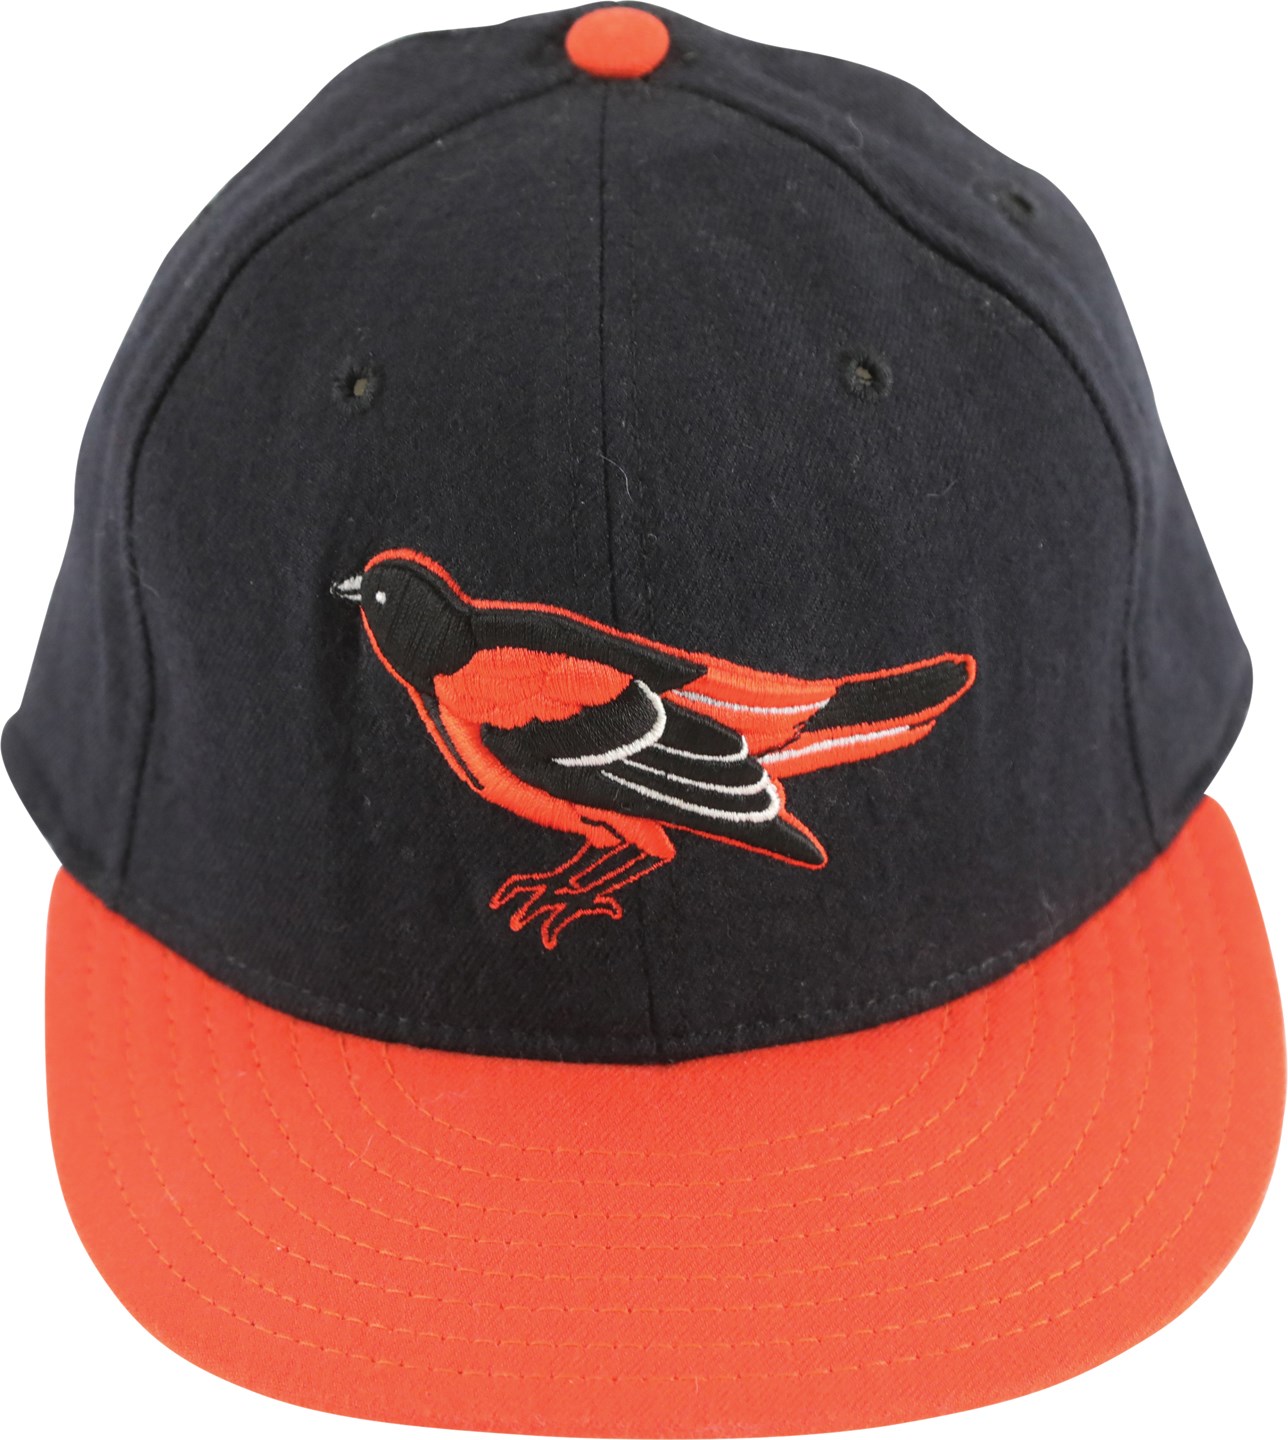 Baseball Equipment - Circa 1995 Rafael Palmeiro Game Used Baltimore Orioles Hat